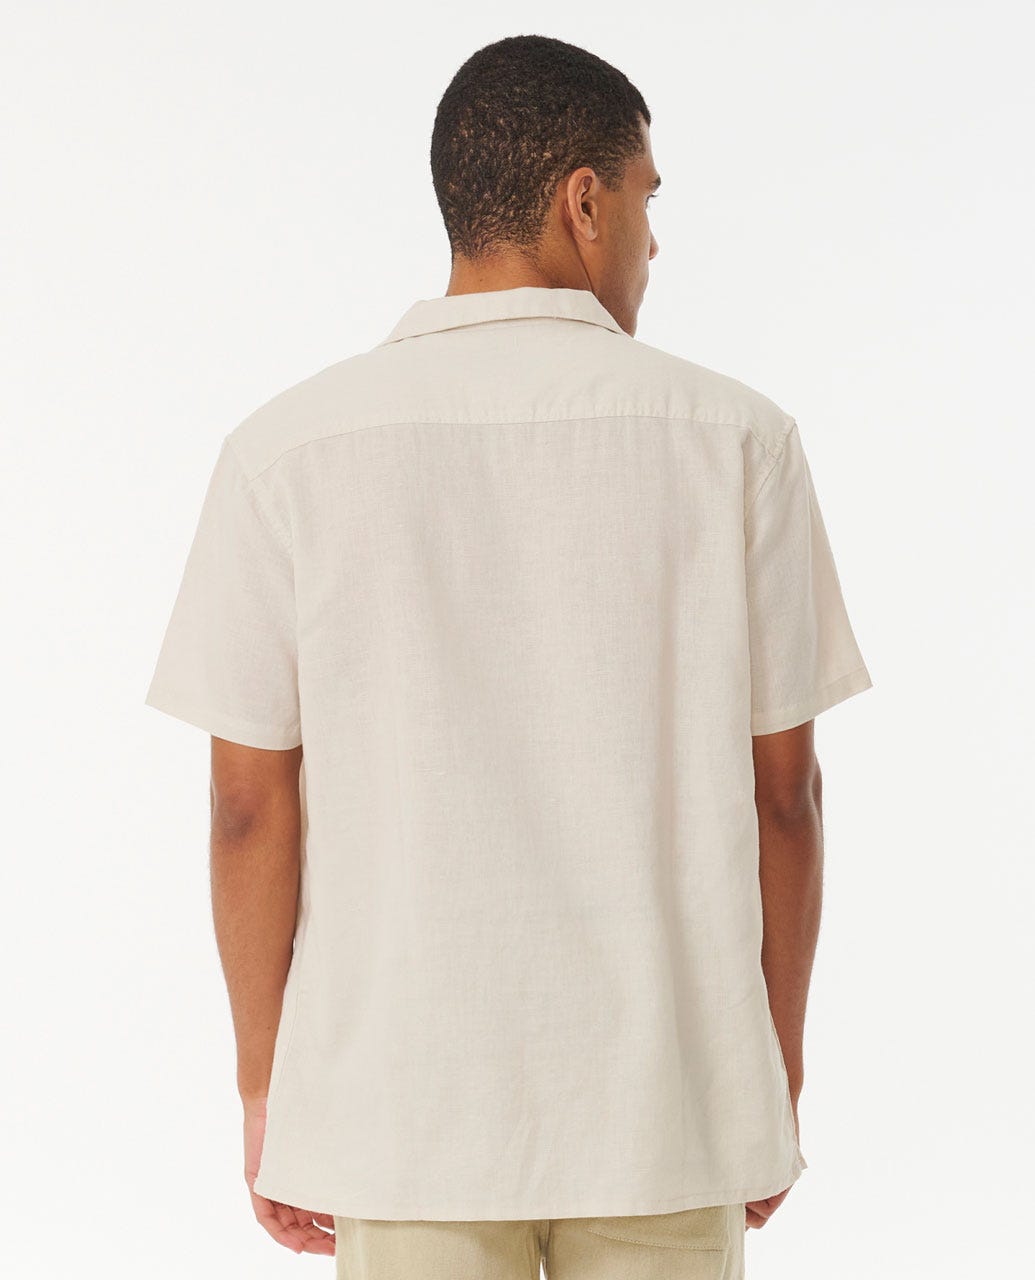 Rip Curl Mod Tropics Vert Short Sleeve Shirt - Bone - Sun Diego Boardshop